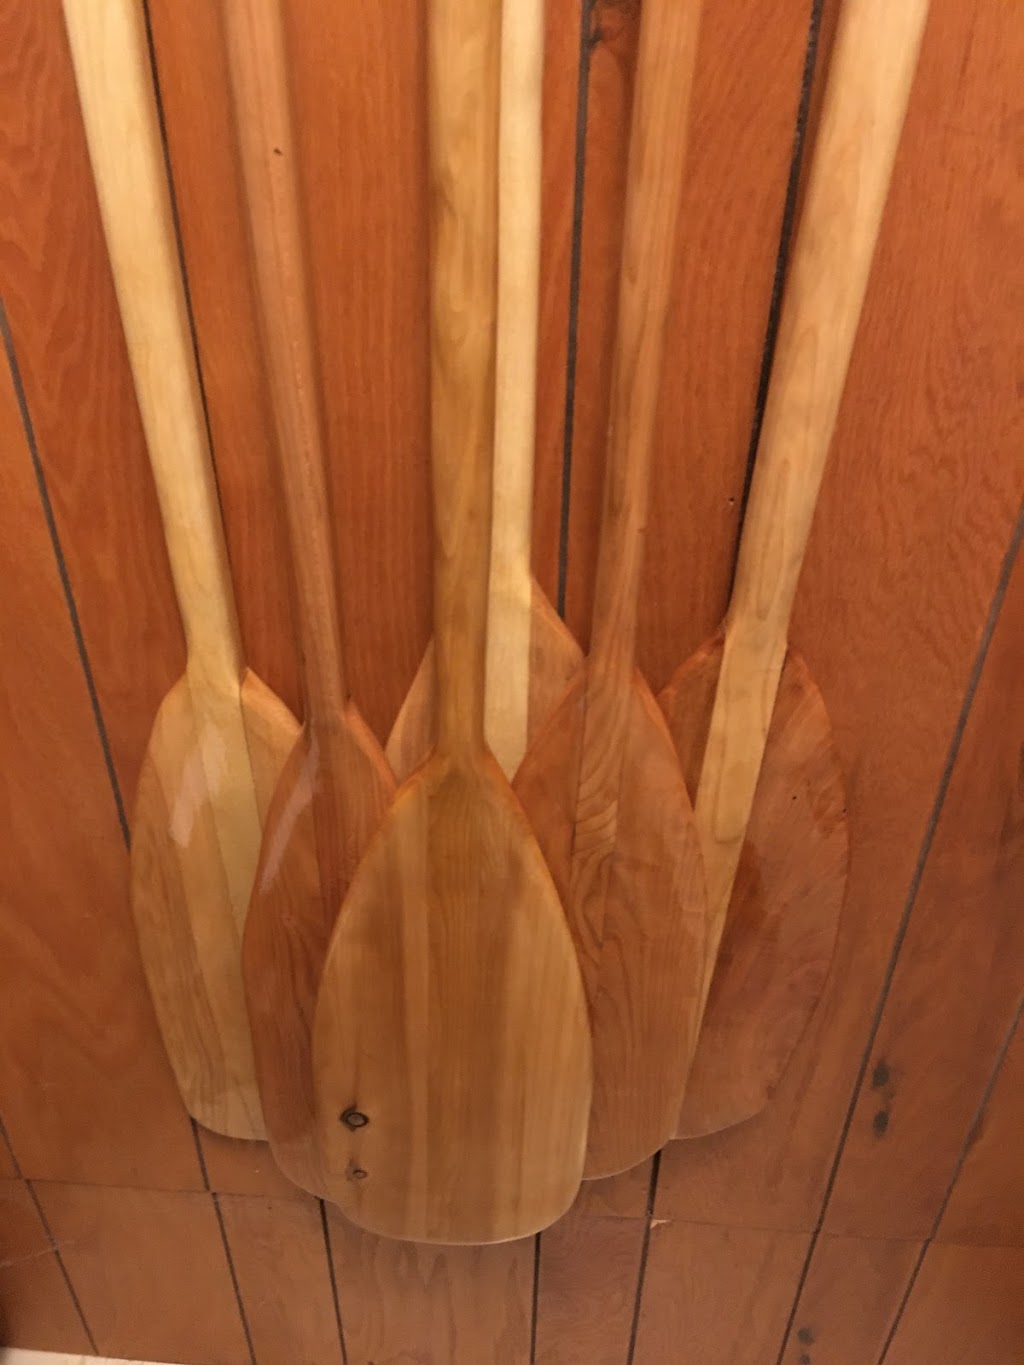 Orono Custom Woodworking | 5699 Gamsby Rd, Orono, ON L0B 1M0, Canada | Phone: (905) 926-8965